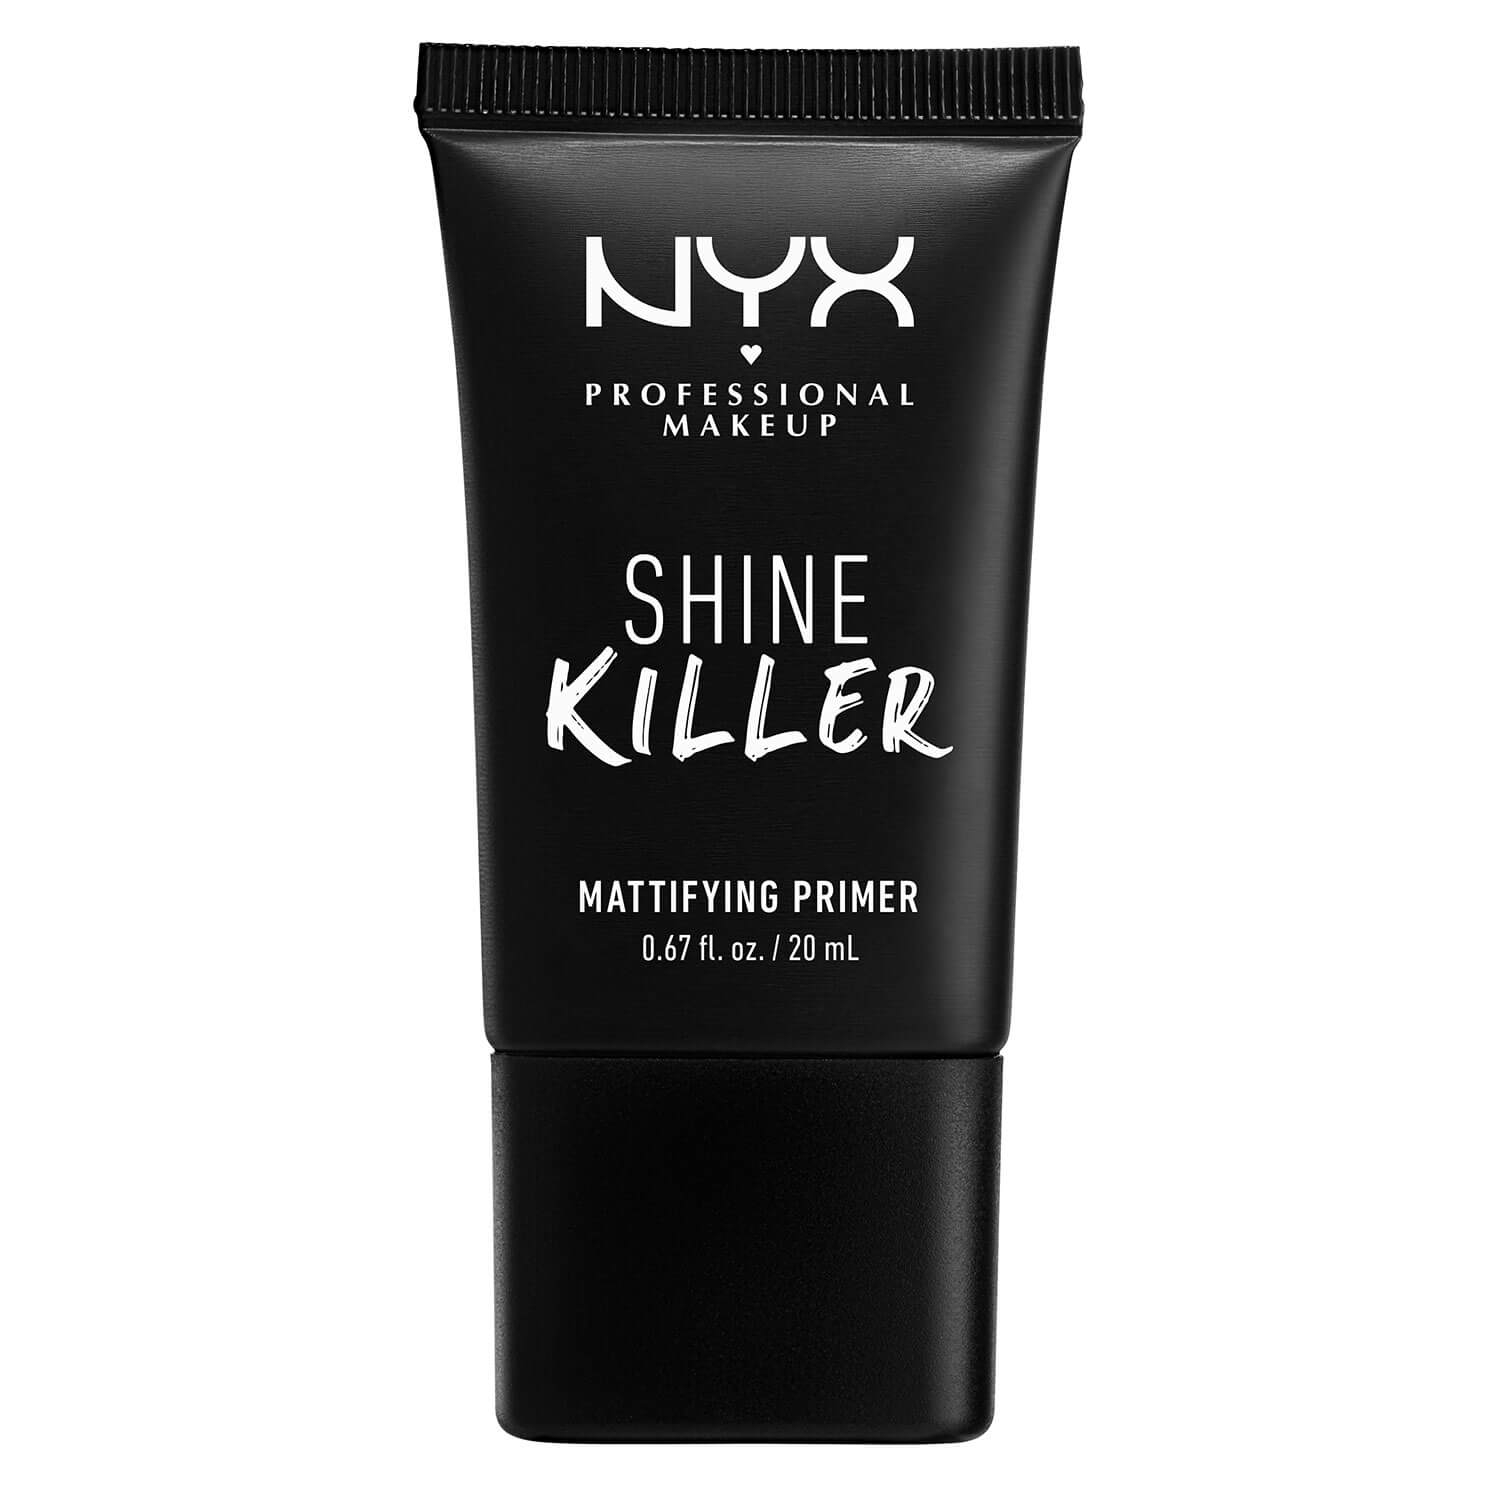 Produktbild von NYX Primer - Shine Killer Mattifying Primer